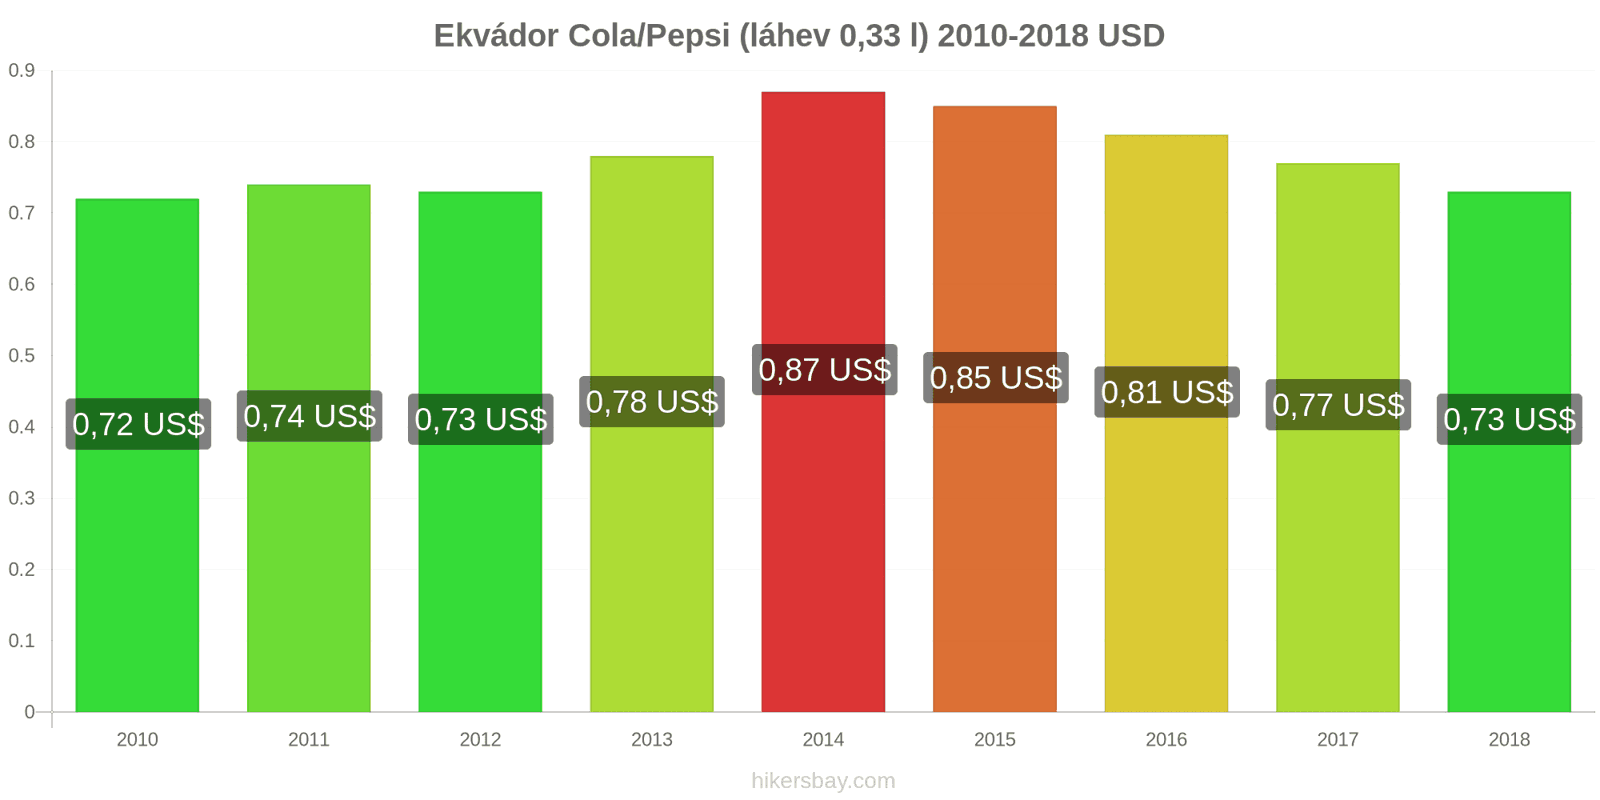 Ekvádor změny cen Coca-Cola/Pepsi (láhev 0.33 l) hikersbay.com